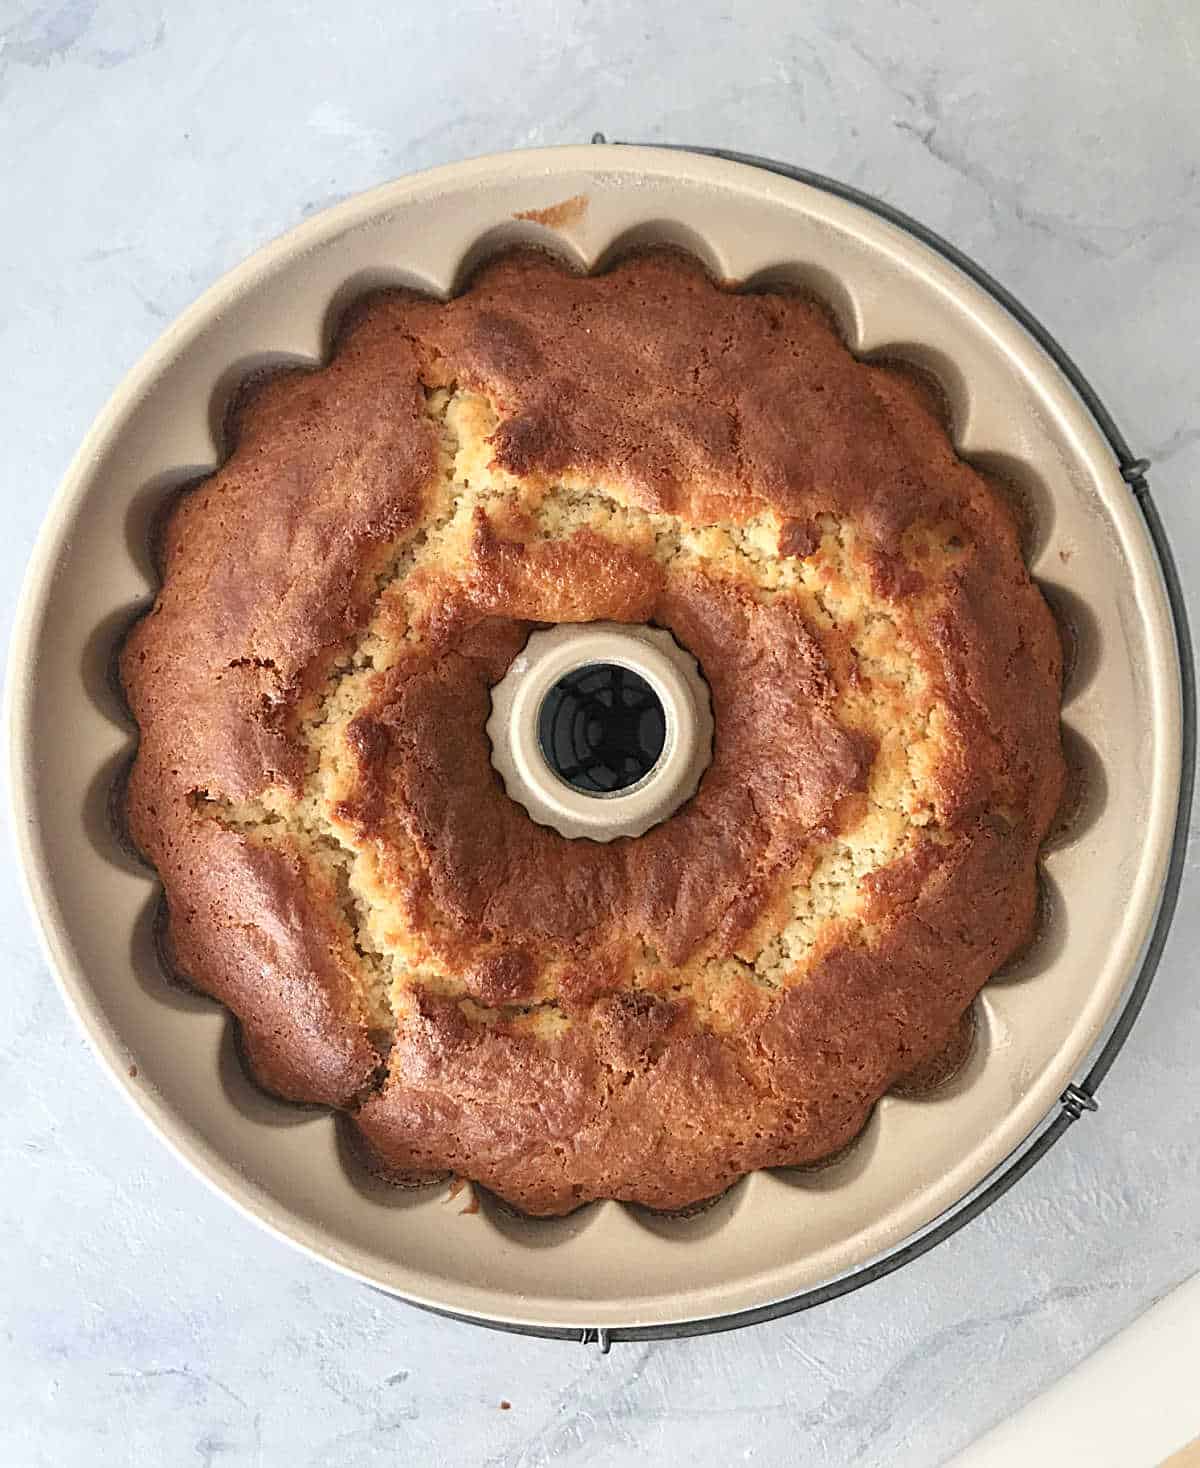 Baked cake in bundt pan on grey surface